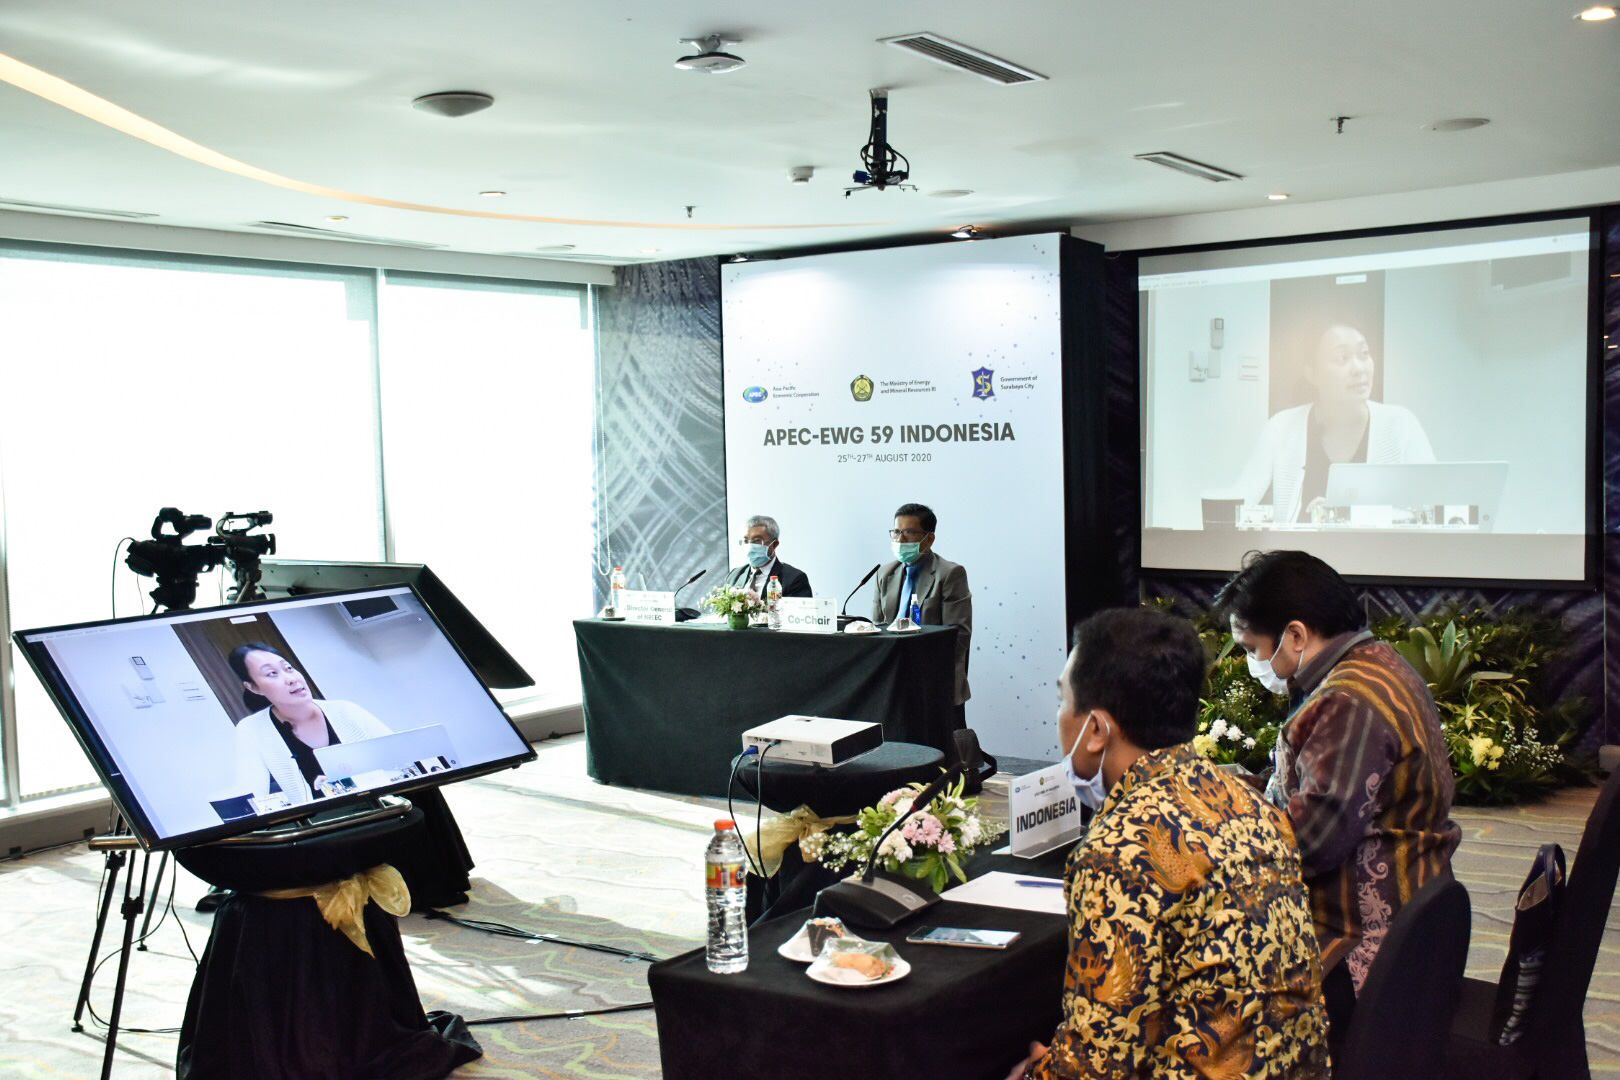 Suasana Virtual Conference pembukaan APEC EWG-59 Indonesia di Hotel Novotel Tangerang, Banten. (26/08/2020)